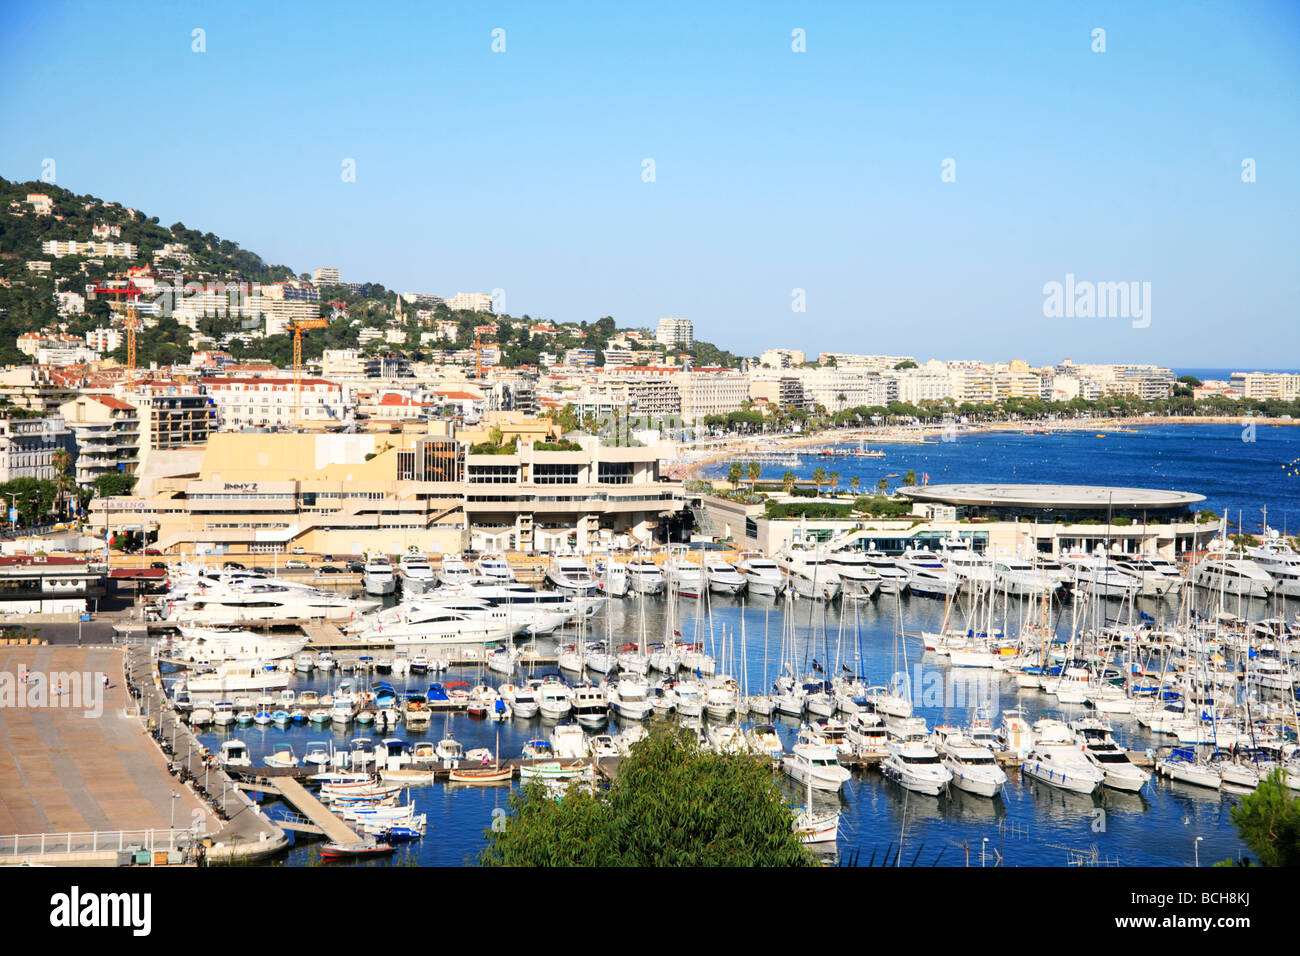 Old Harbour y del Palais de Festivals sede del Festival de Cine de Cannes Foto de stock